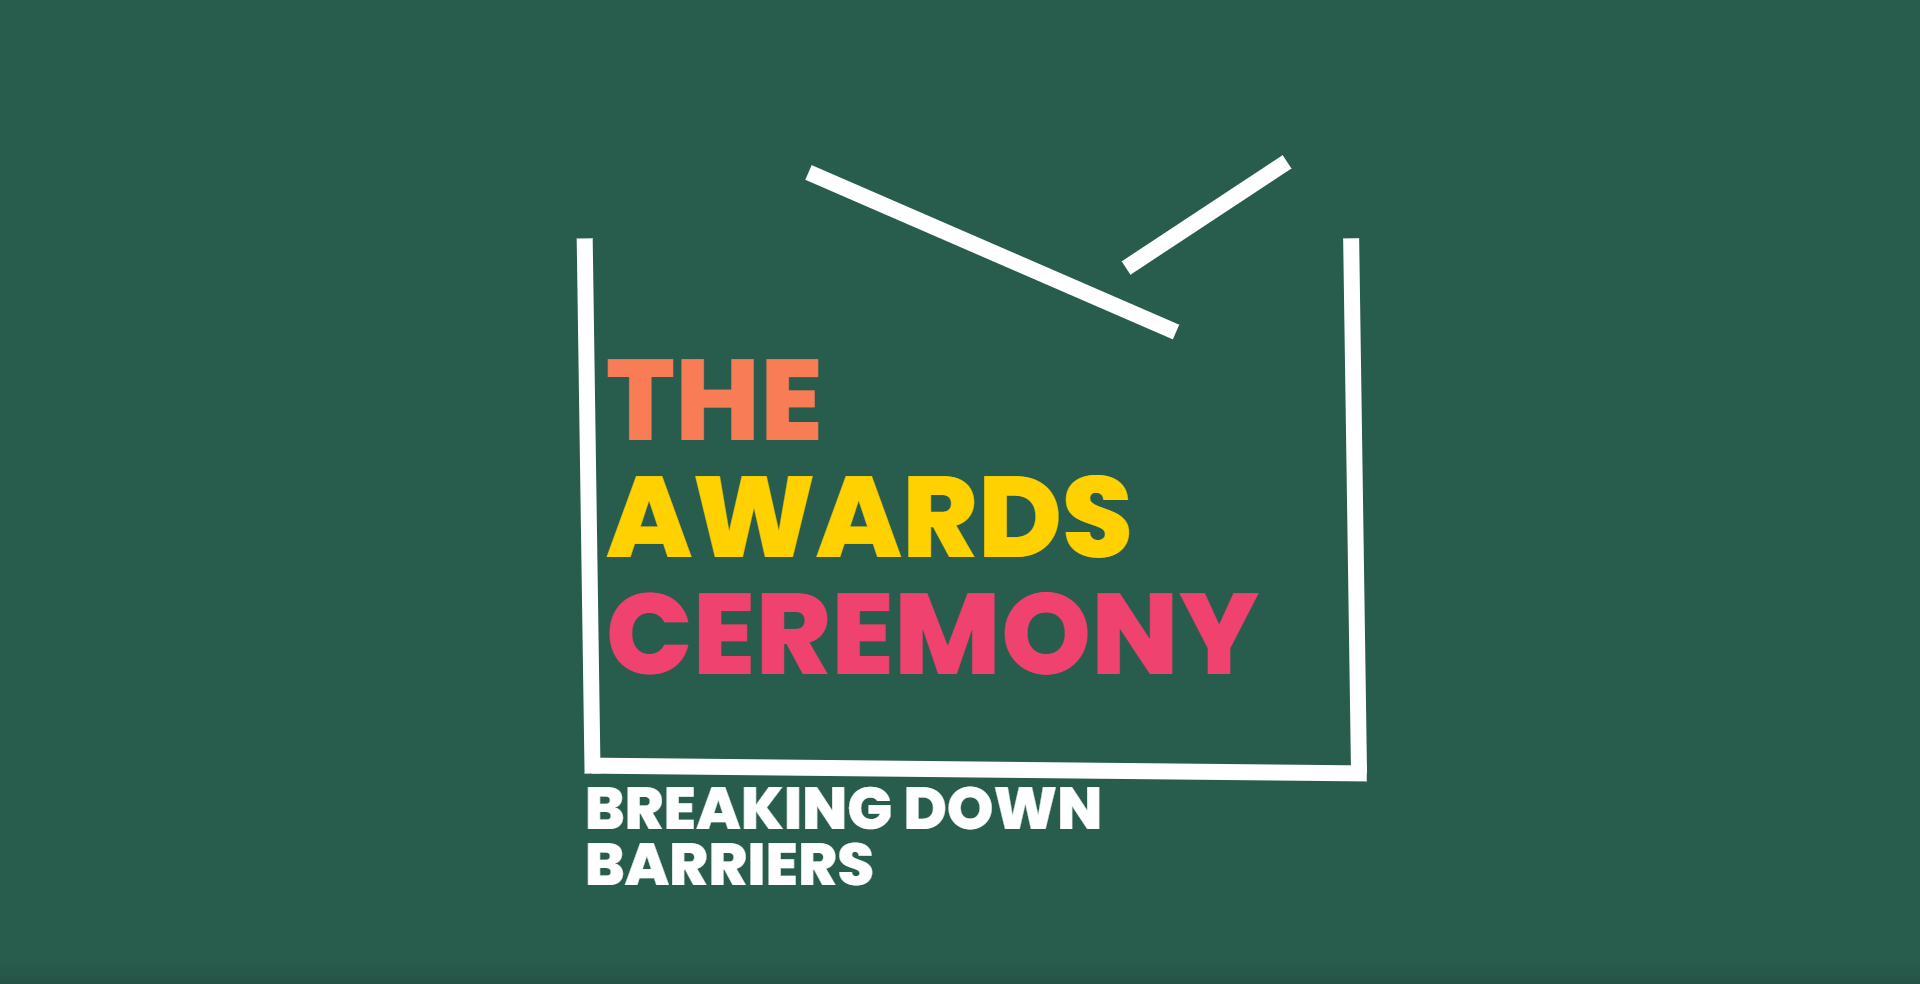 Awards ceremony logo on green background